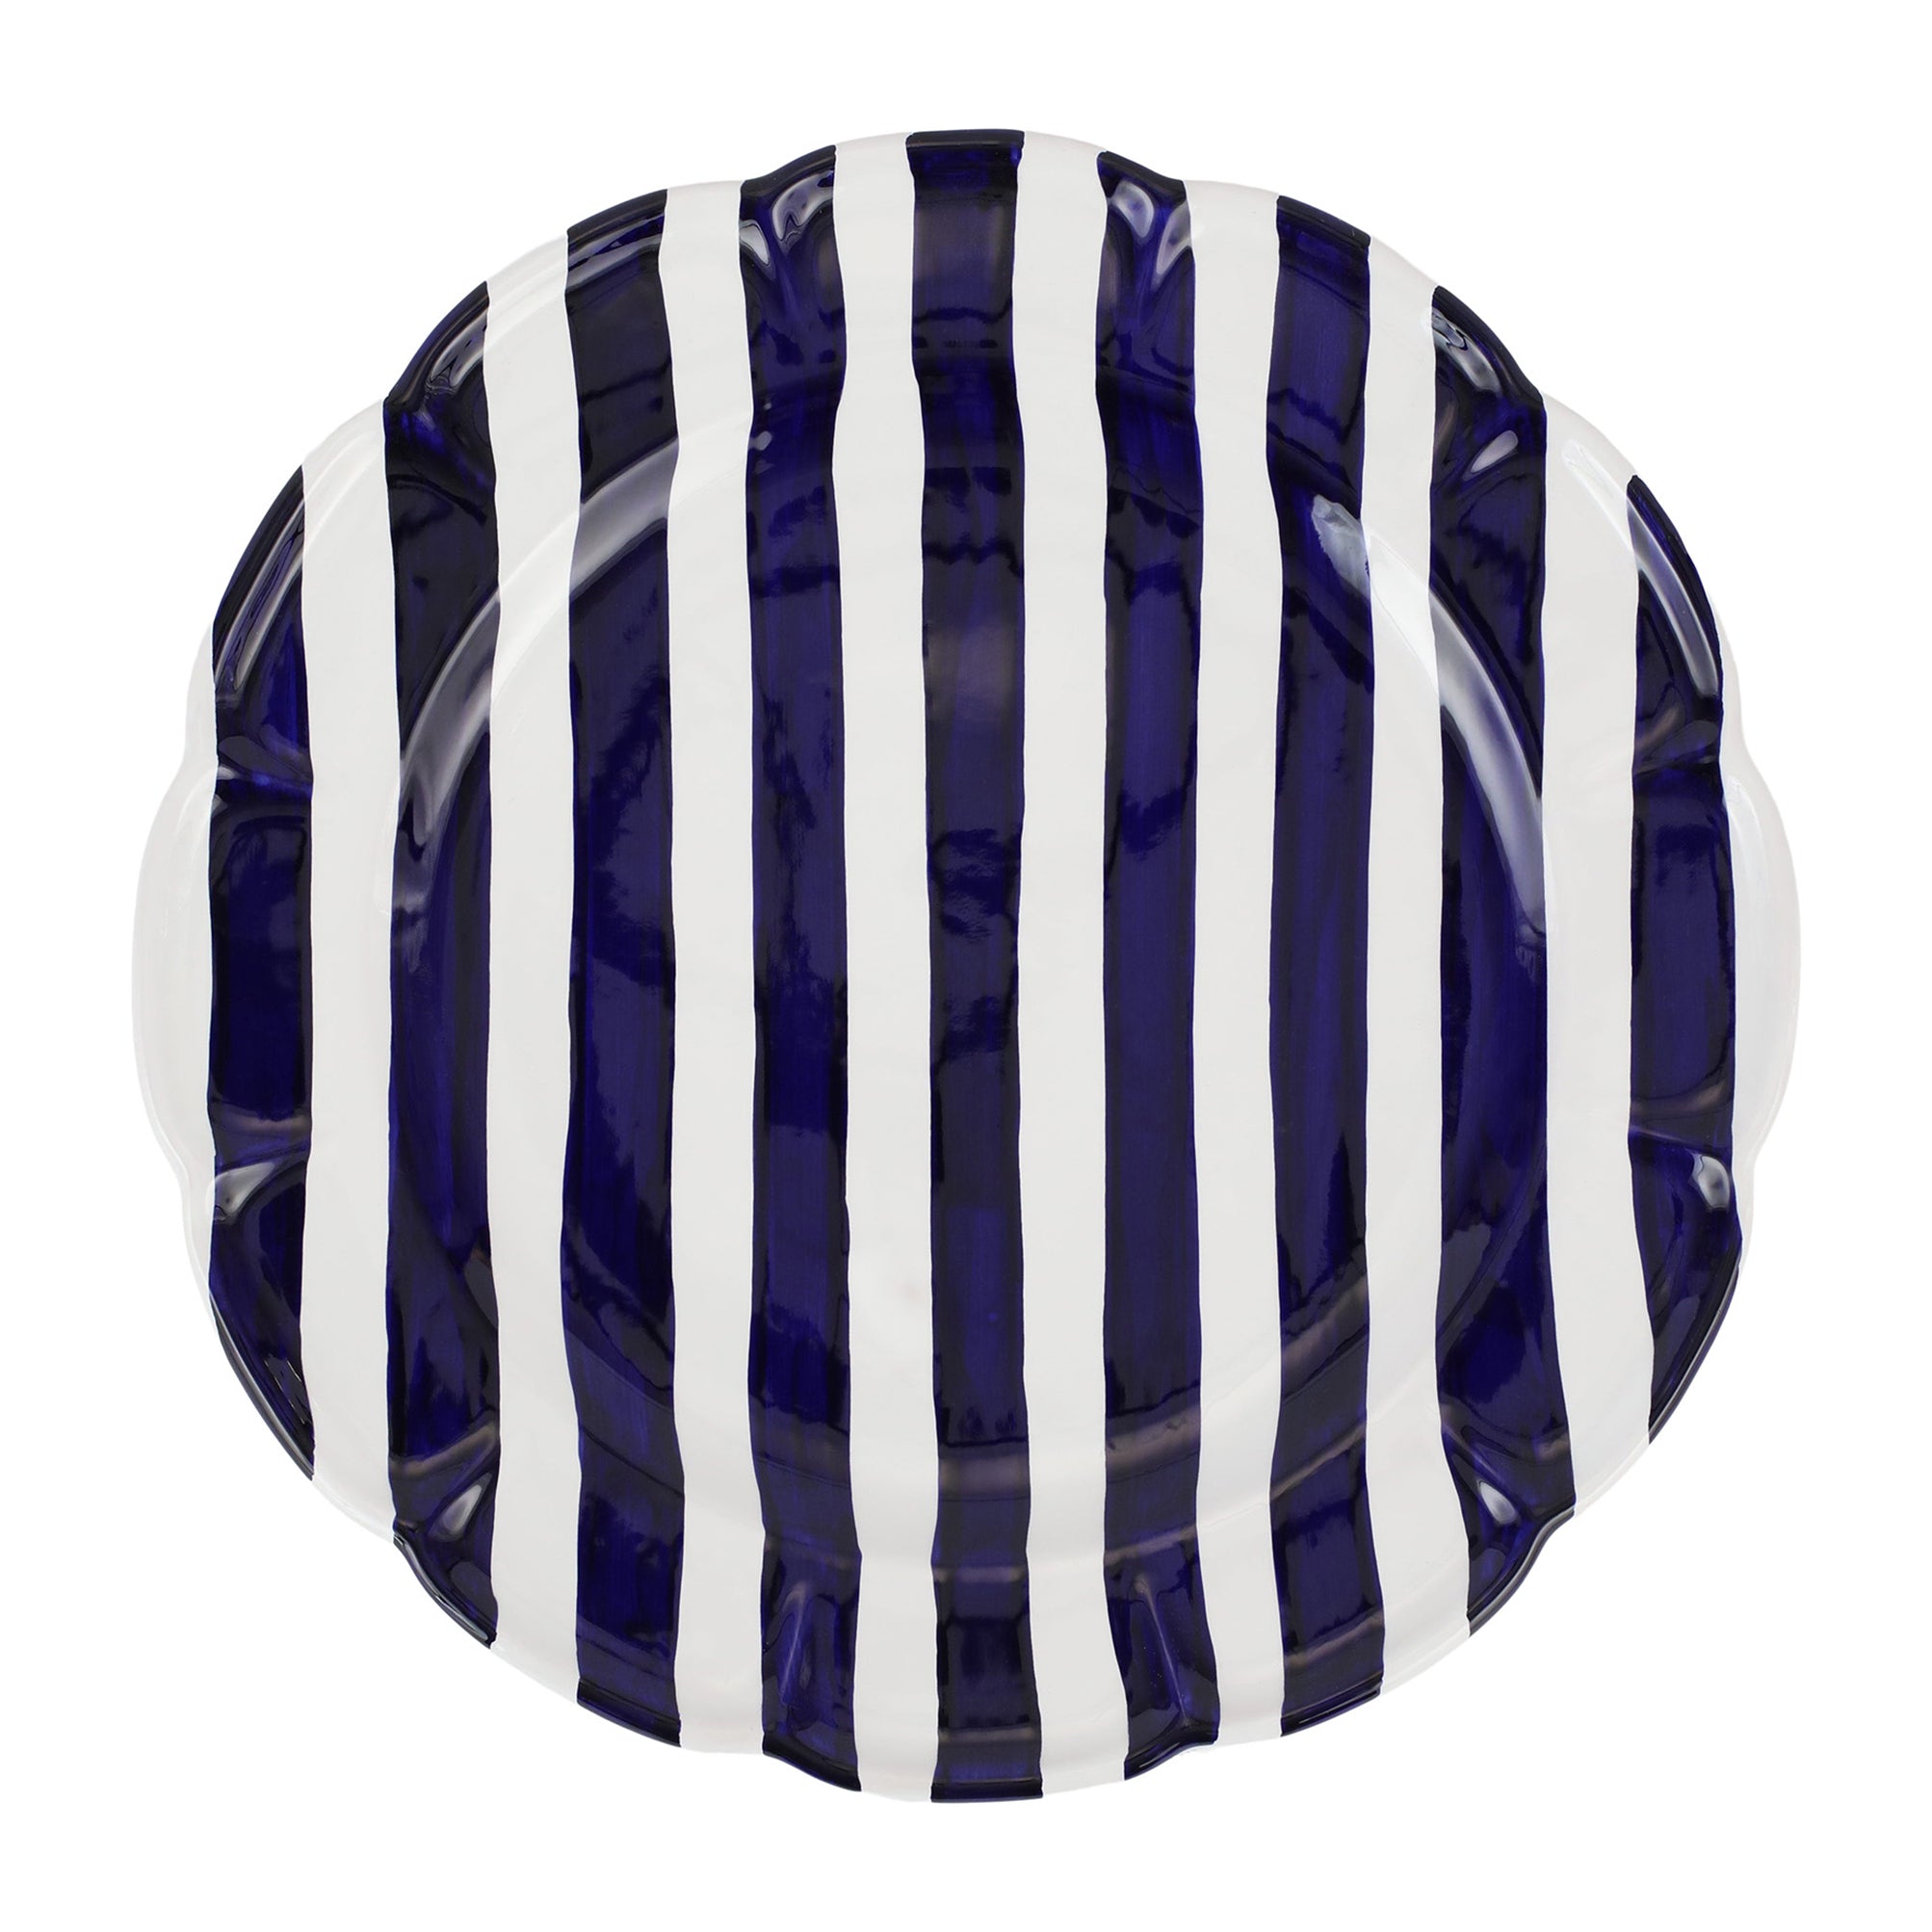 Amalfitana Cobalt Stripe Round Platter